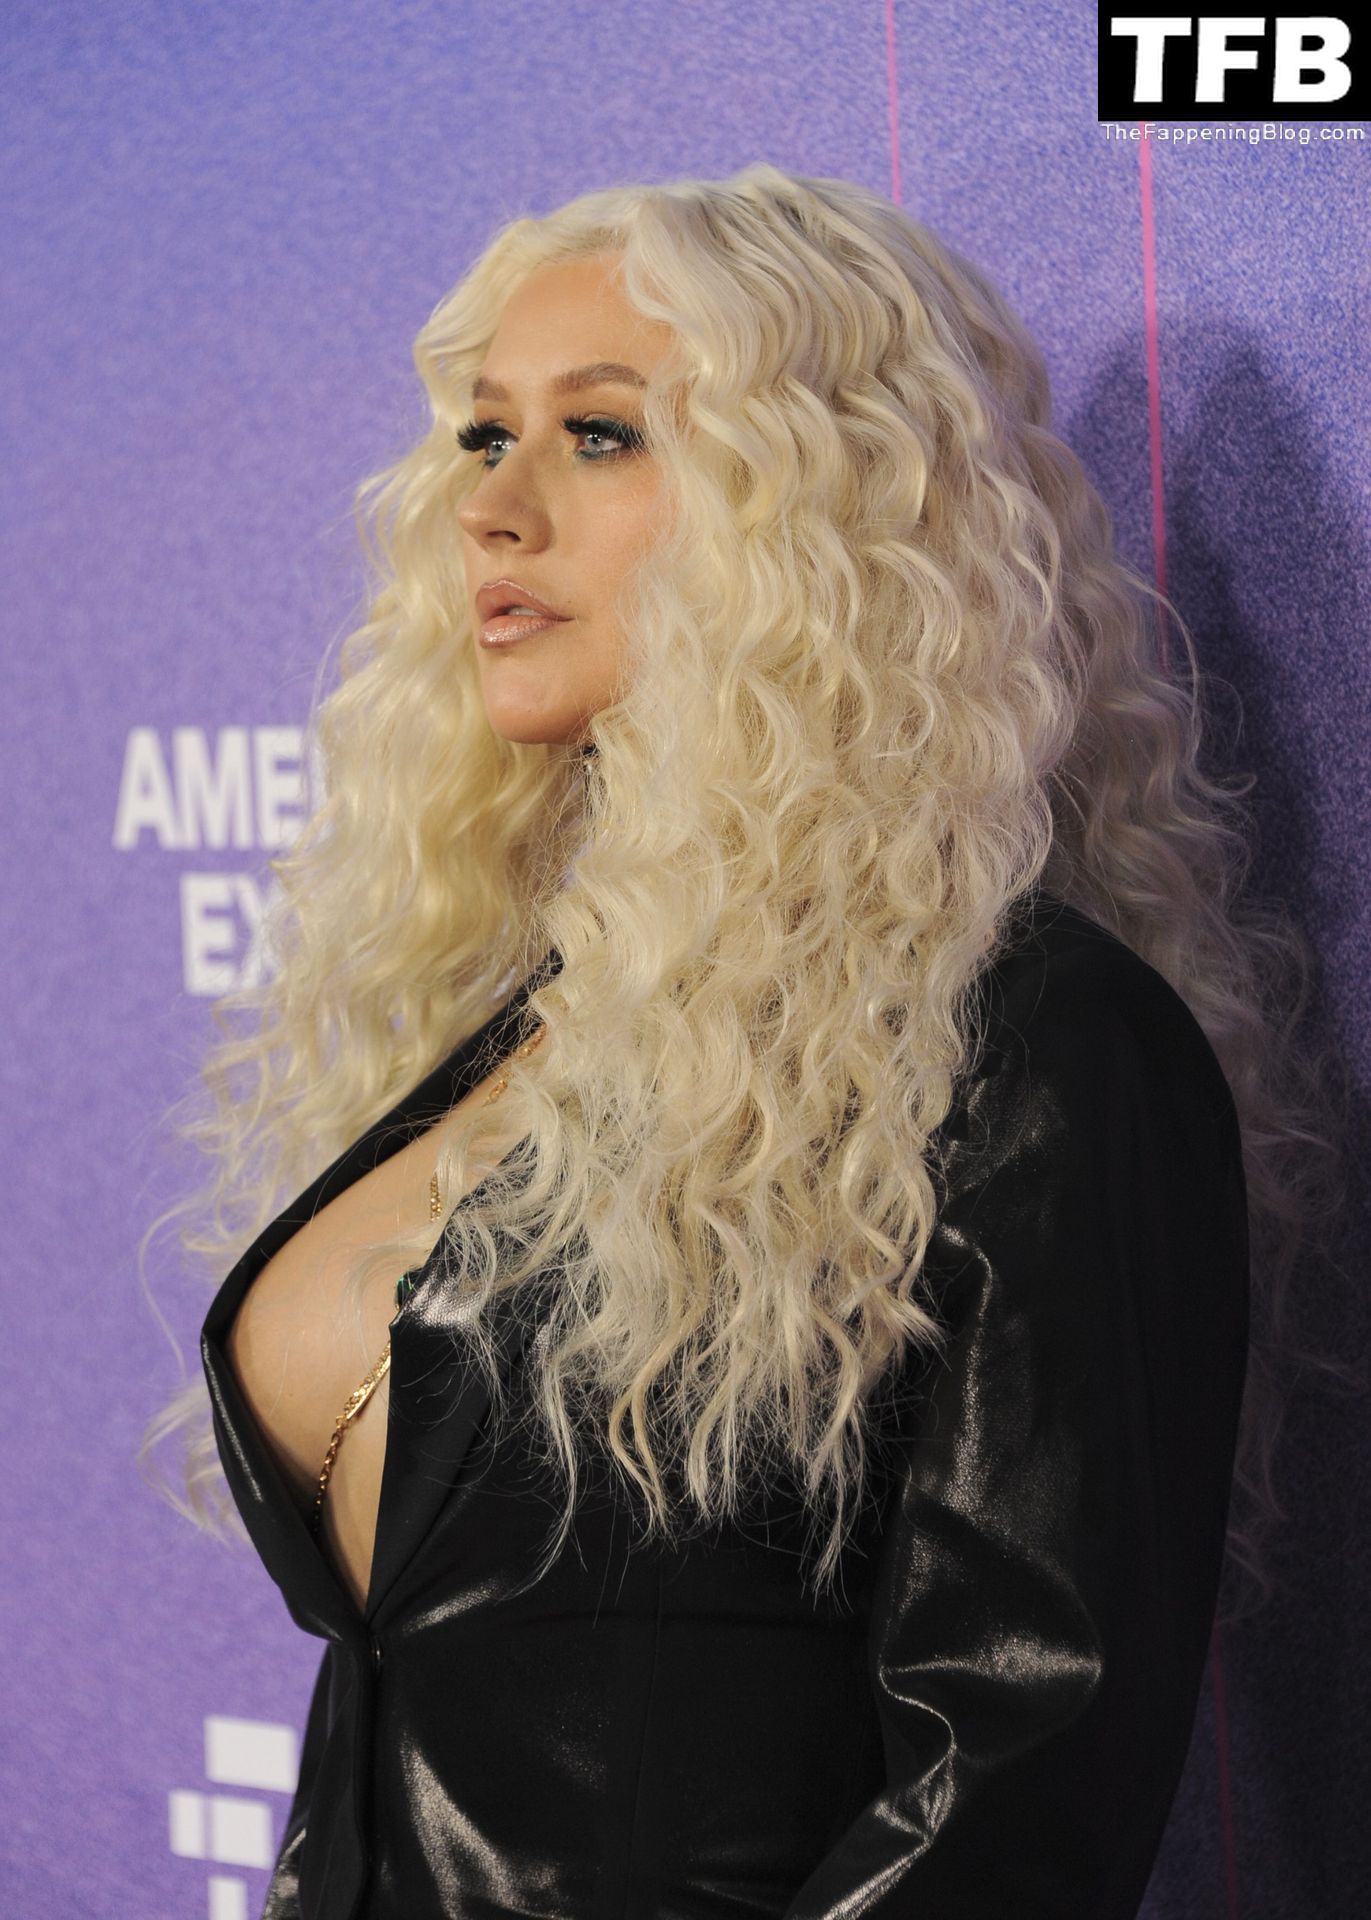 Christina-Aguilera-Sexy-The-Fappening-Blog-16.jpg